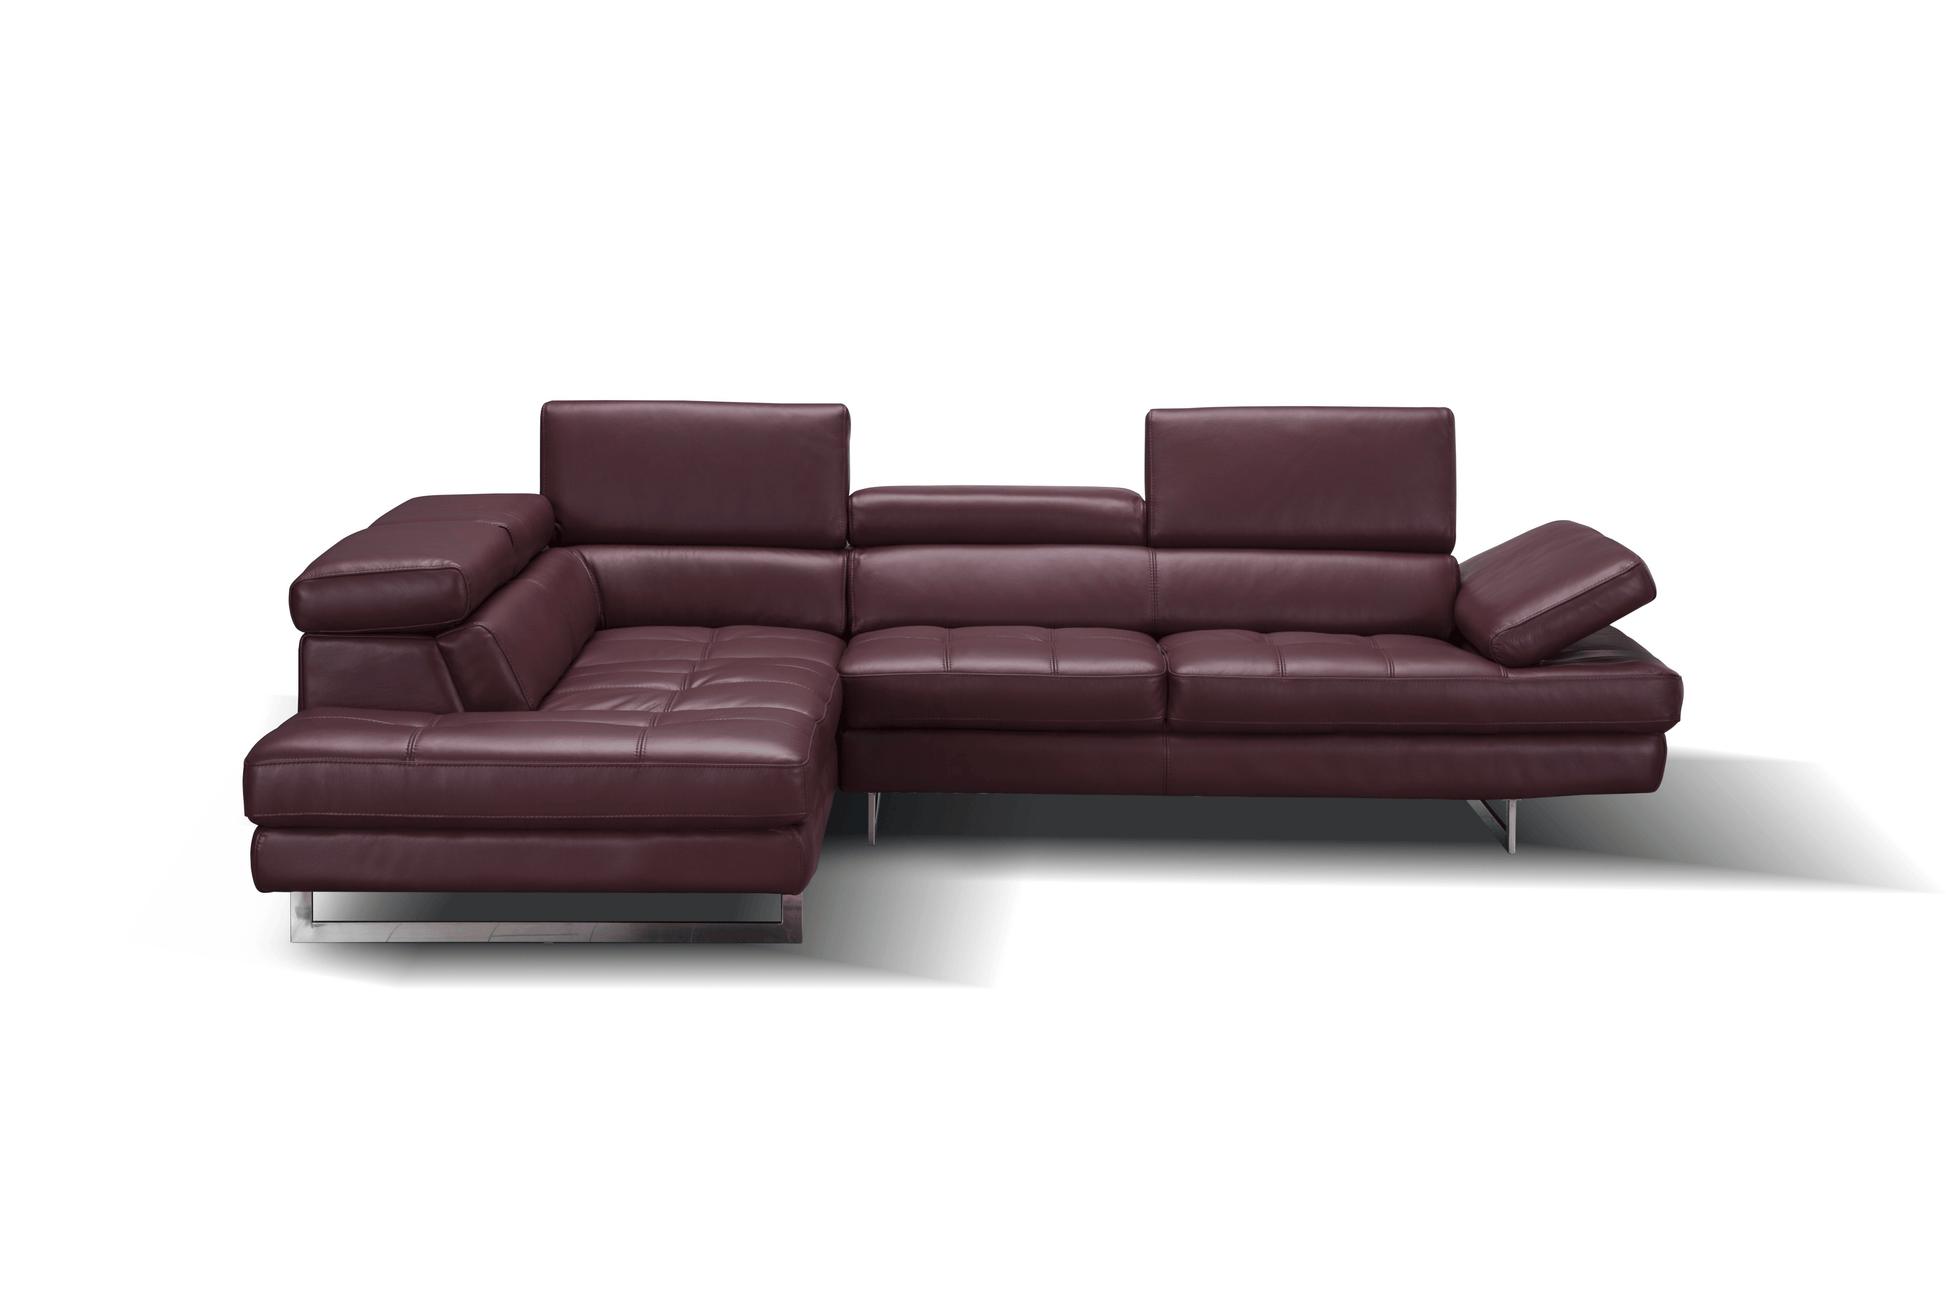 A761 Italian Leather Sectional in Maroon - Venini Furniture 